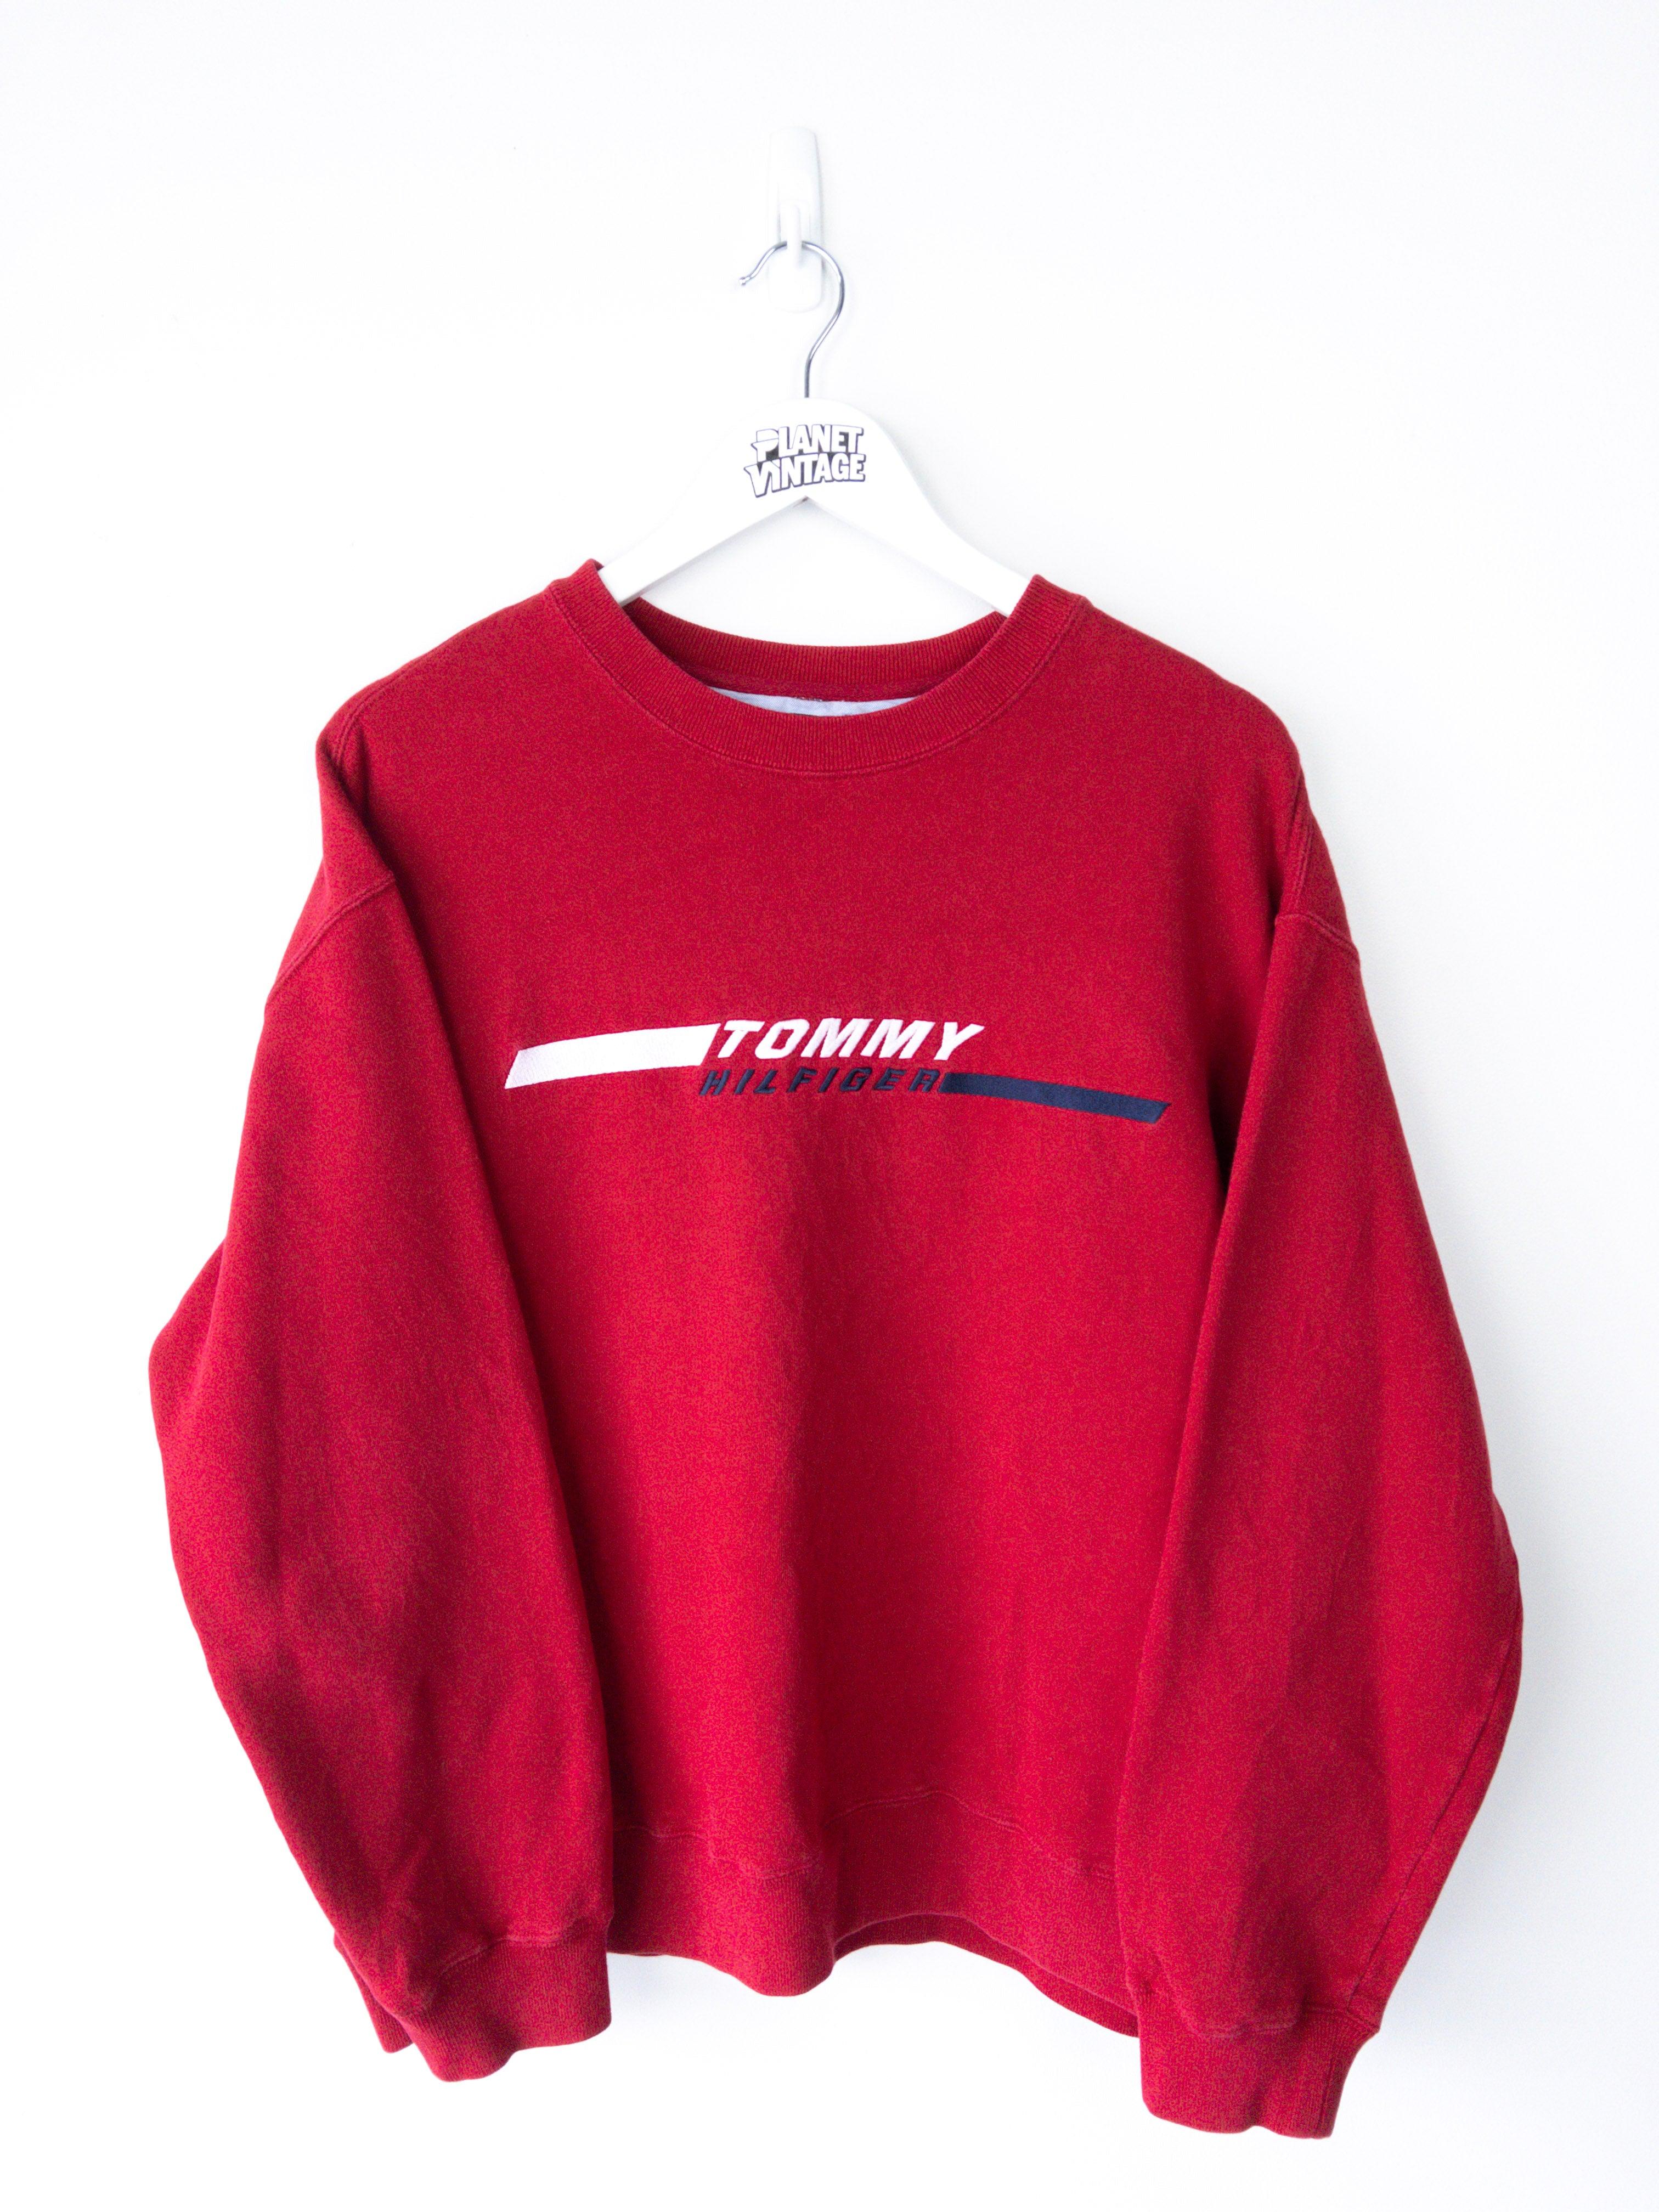 Vintage Tommy Hilfiger Sweatshirt (L)